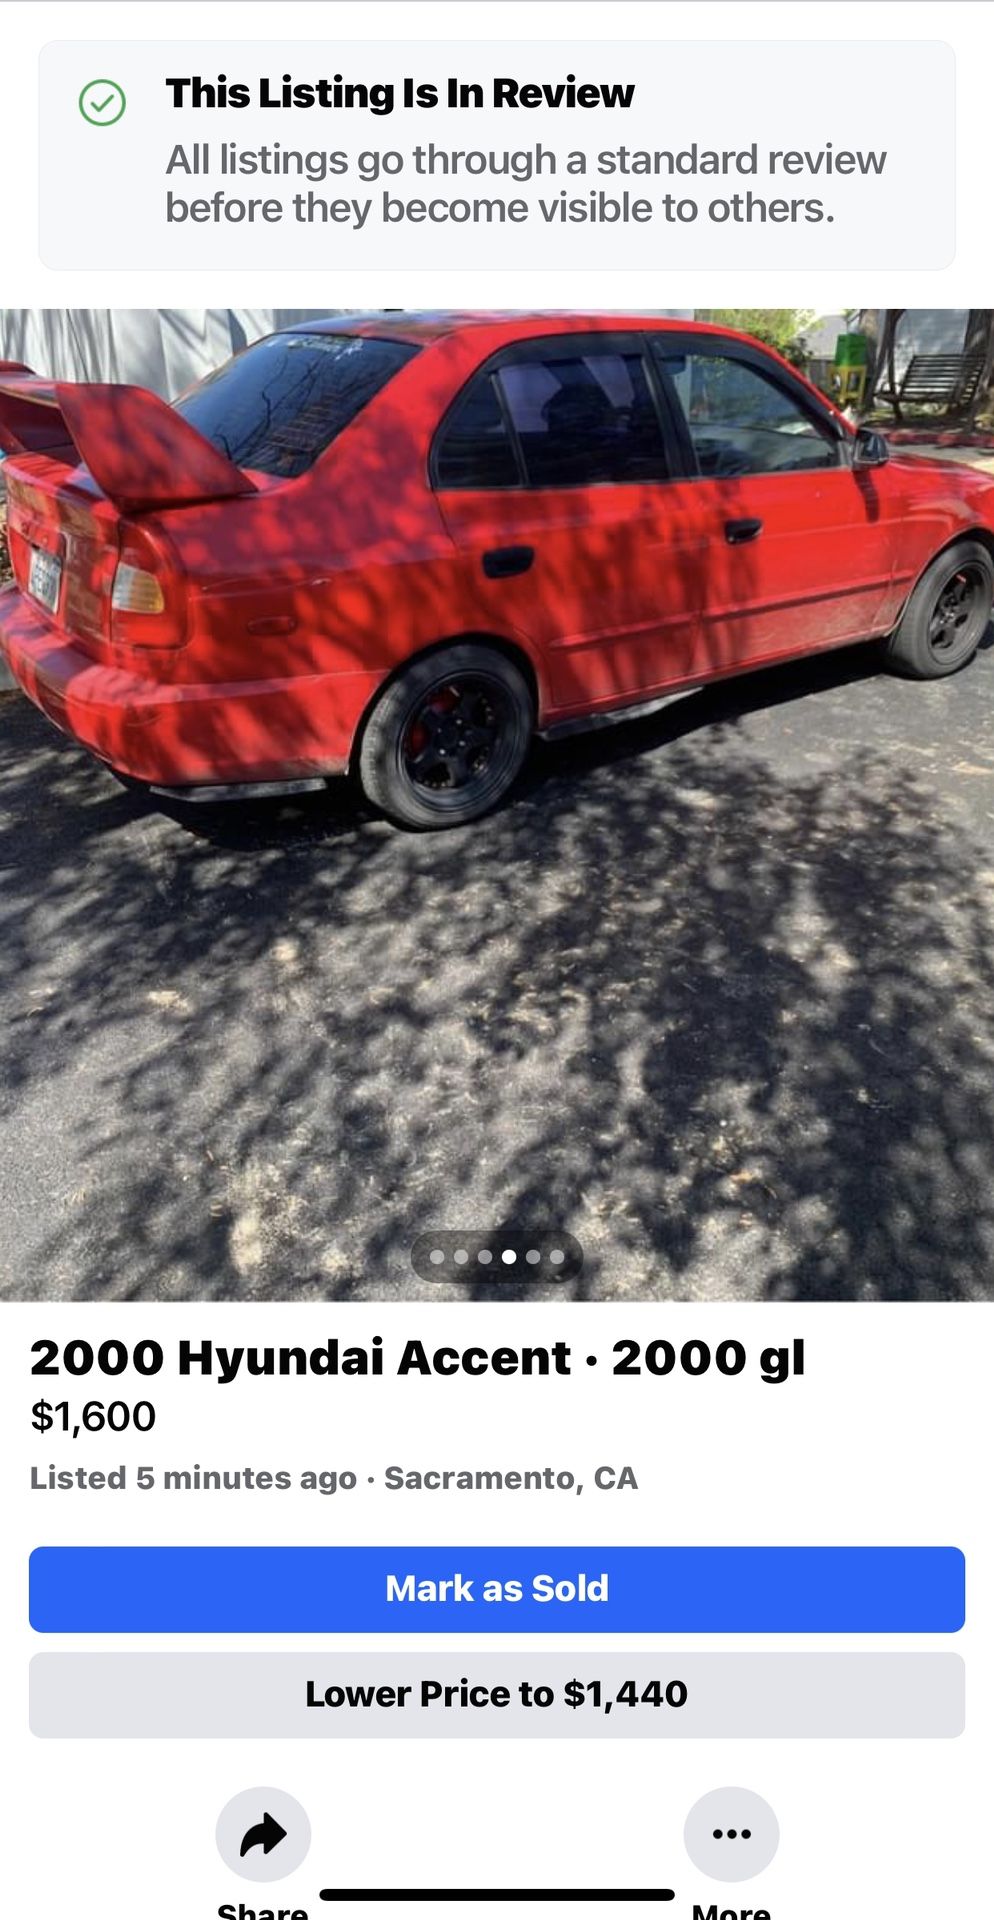 Hyundai Accent 2000 Gl